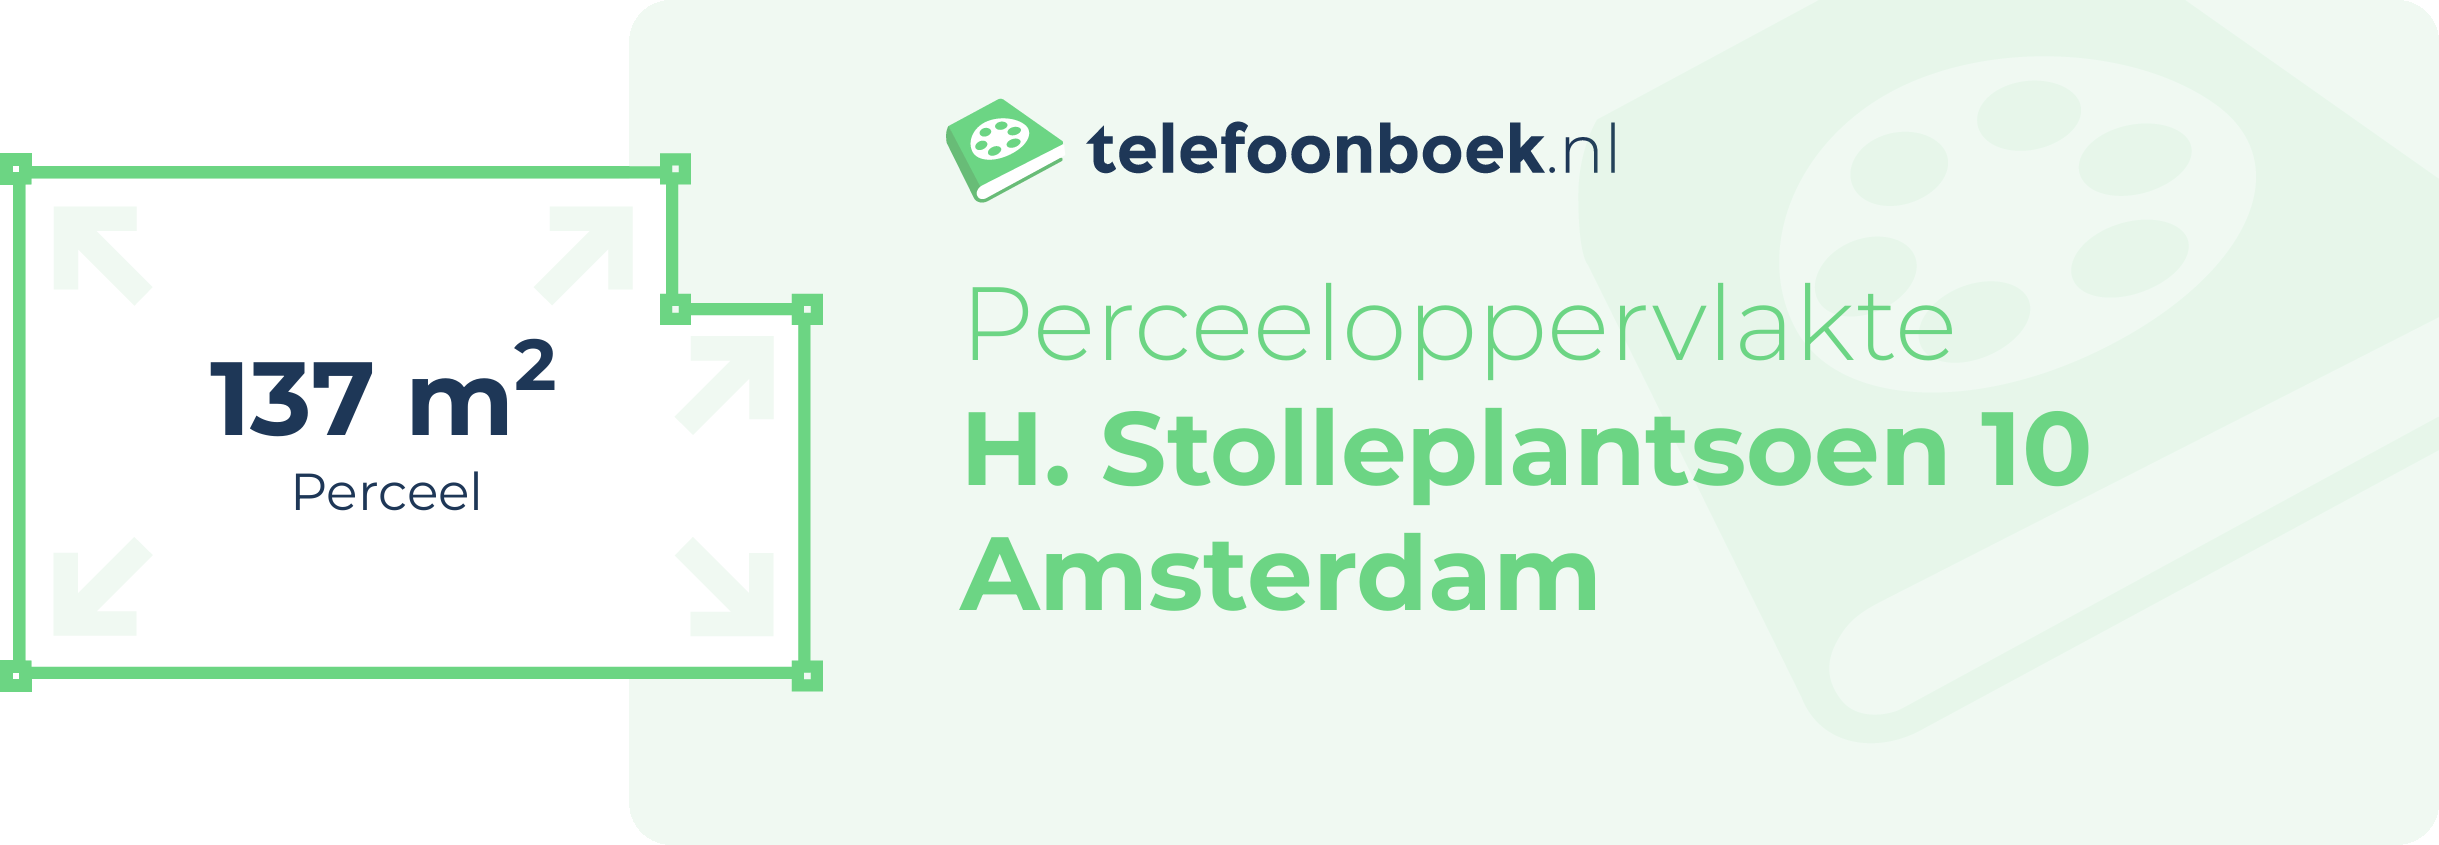 Perceeloppervlakte H. Stolleplantsoen 10 Amsterdam